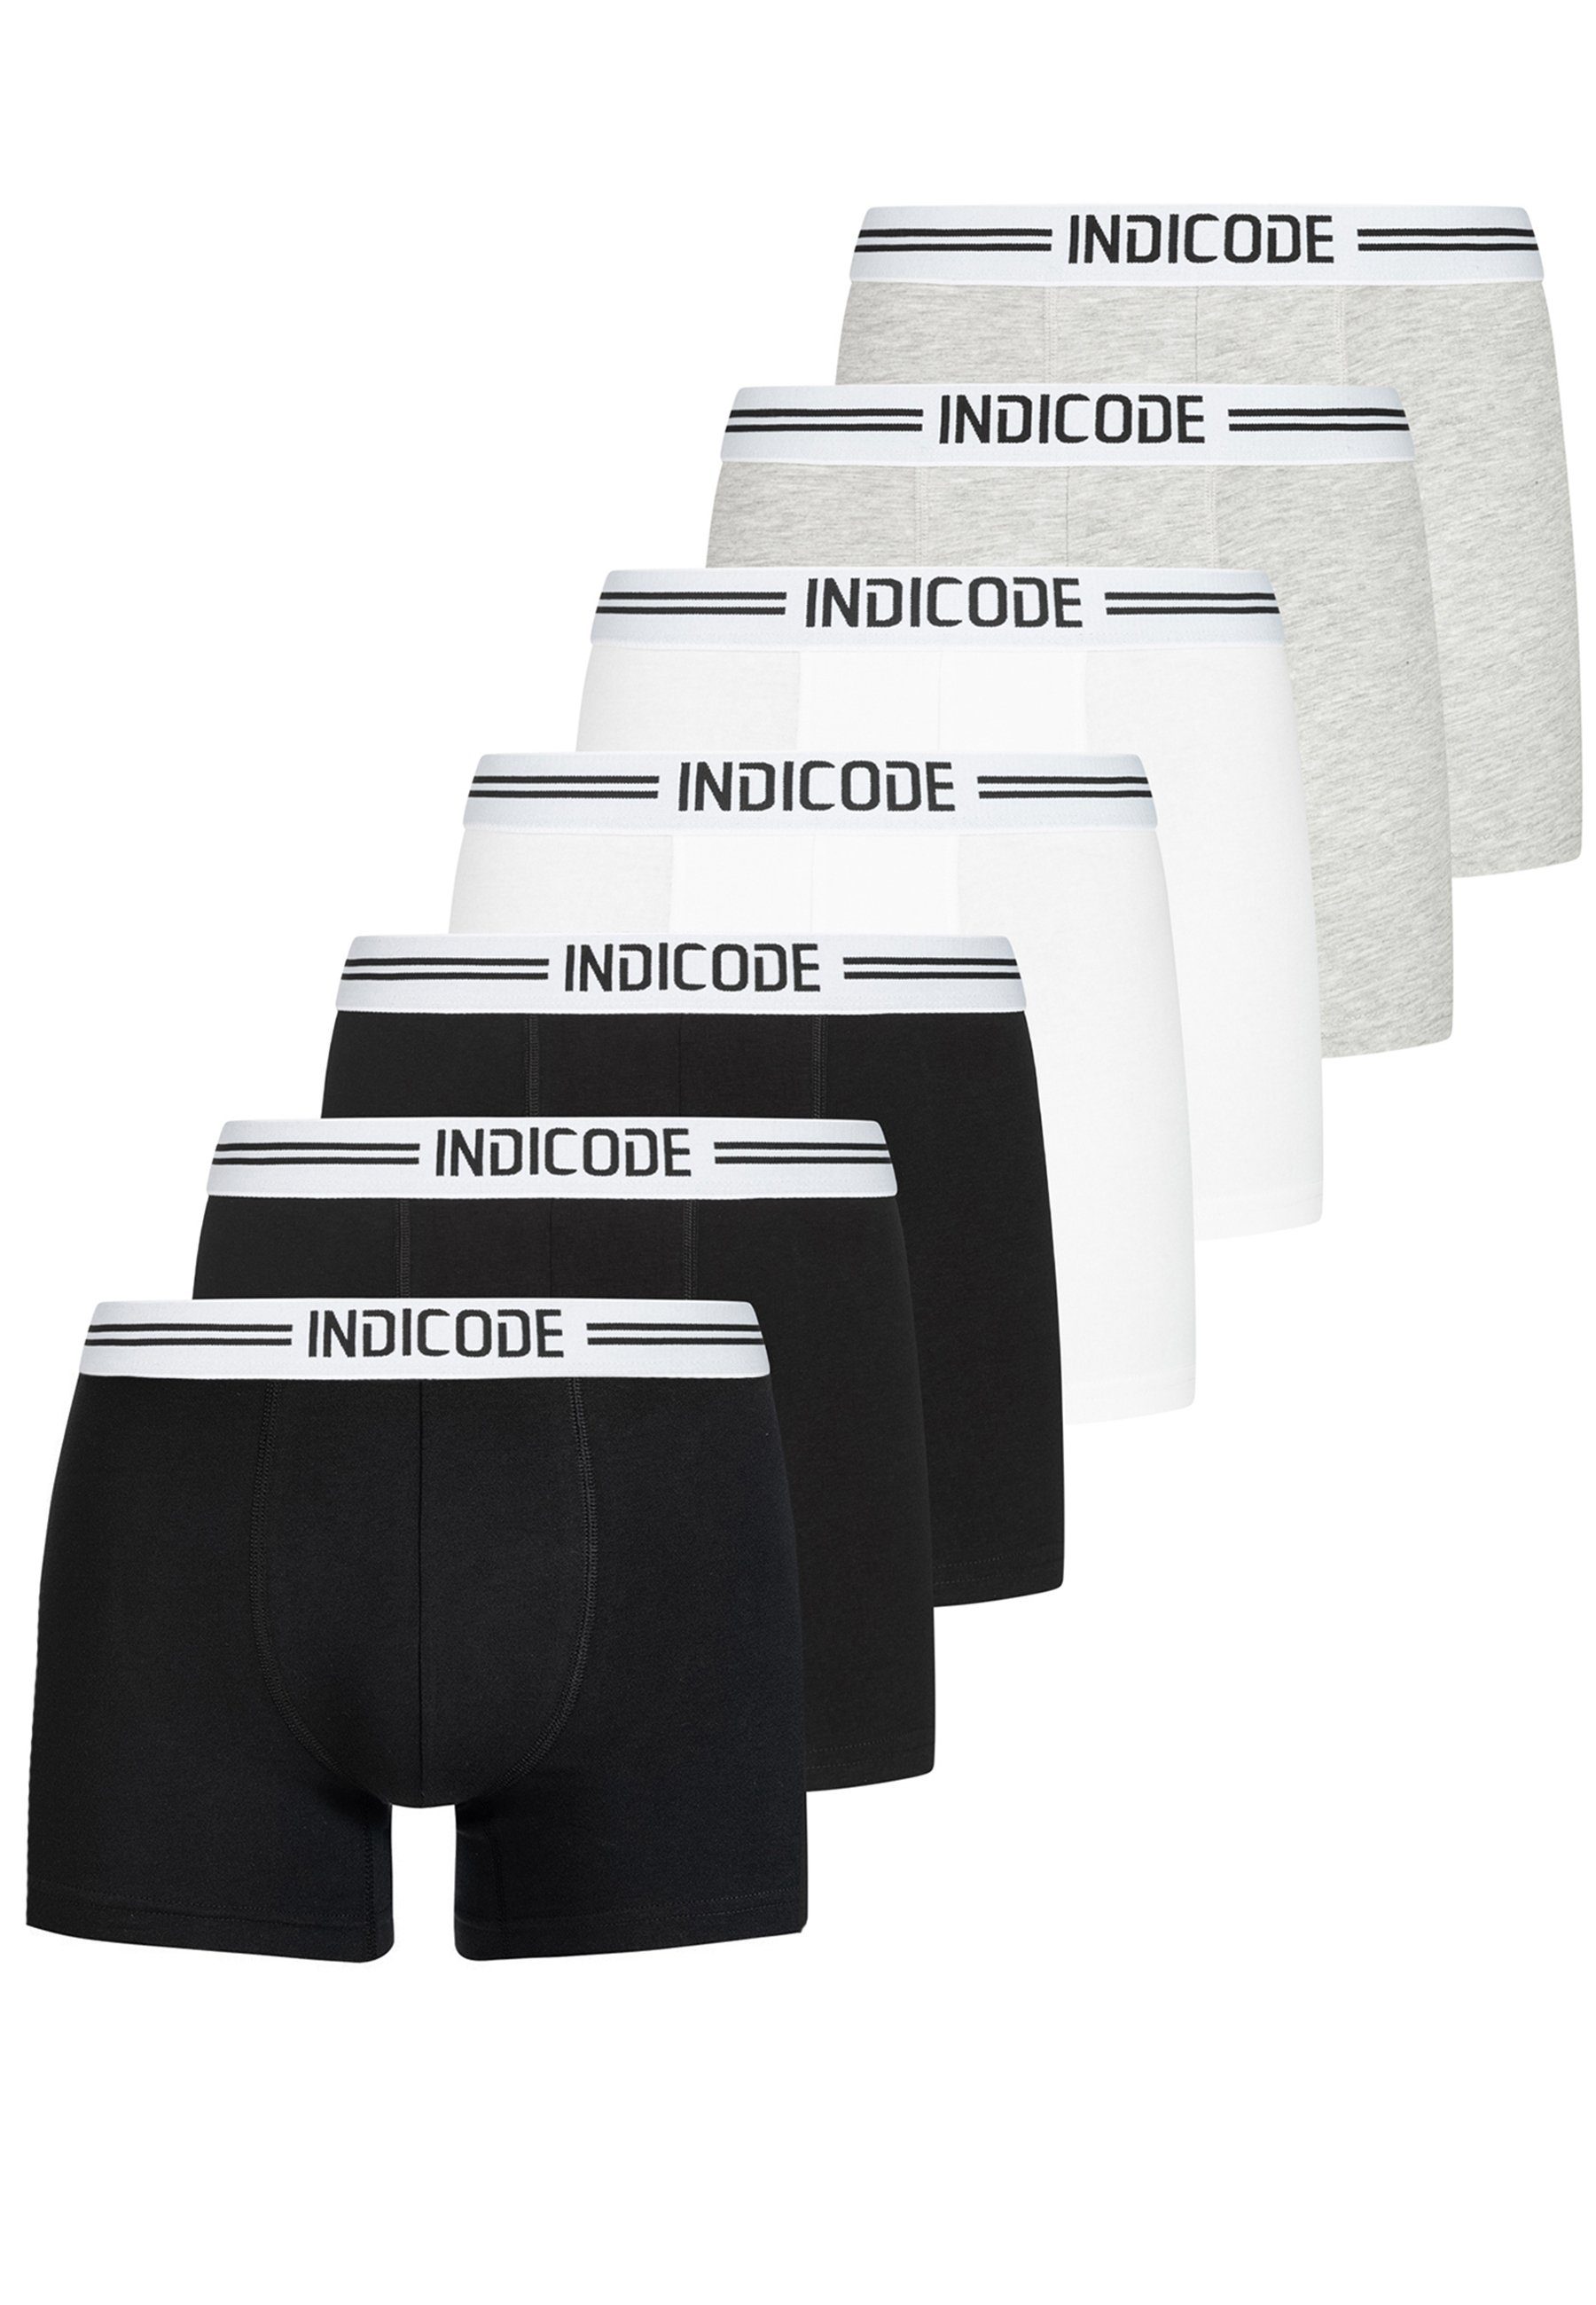 Indicode Boxershorts Copenhagen White/Grey/Black